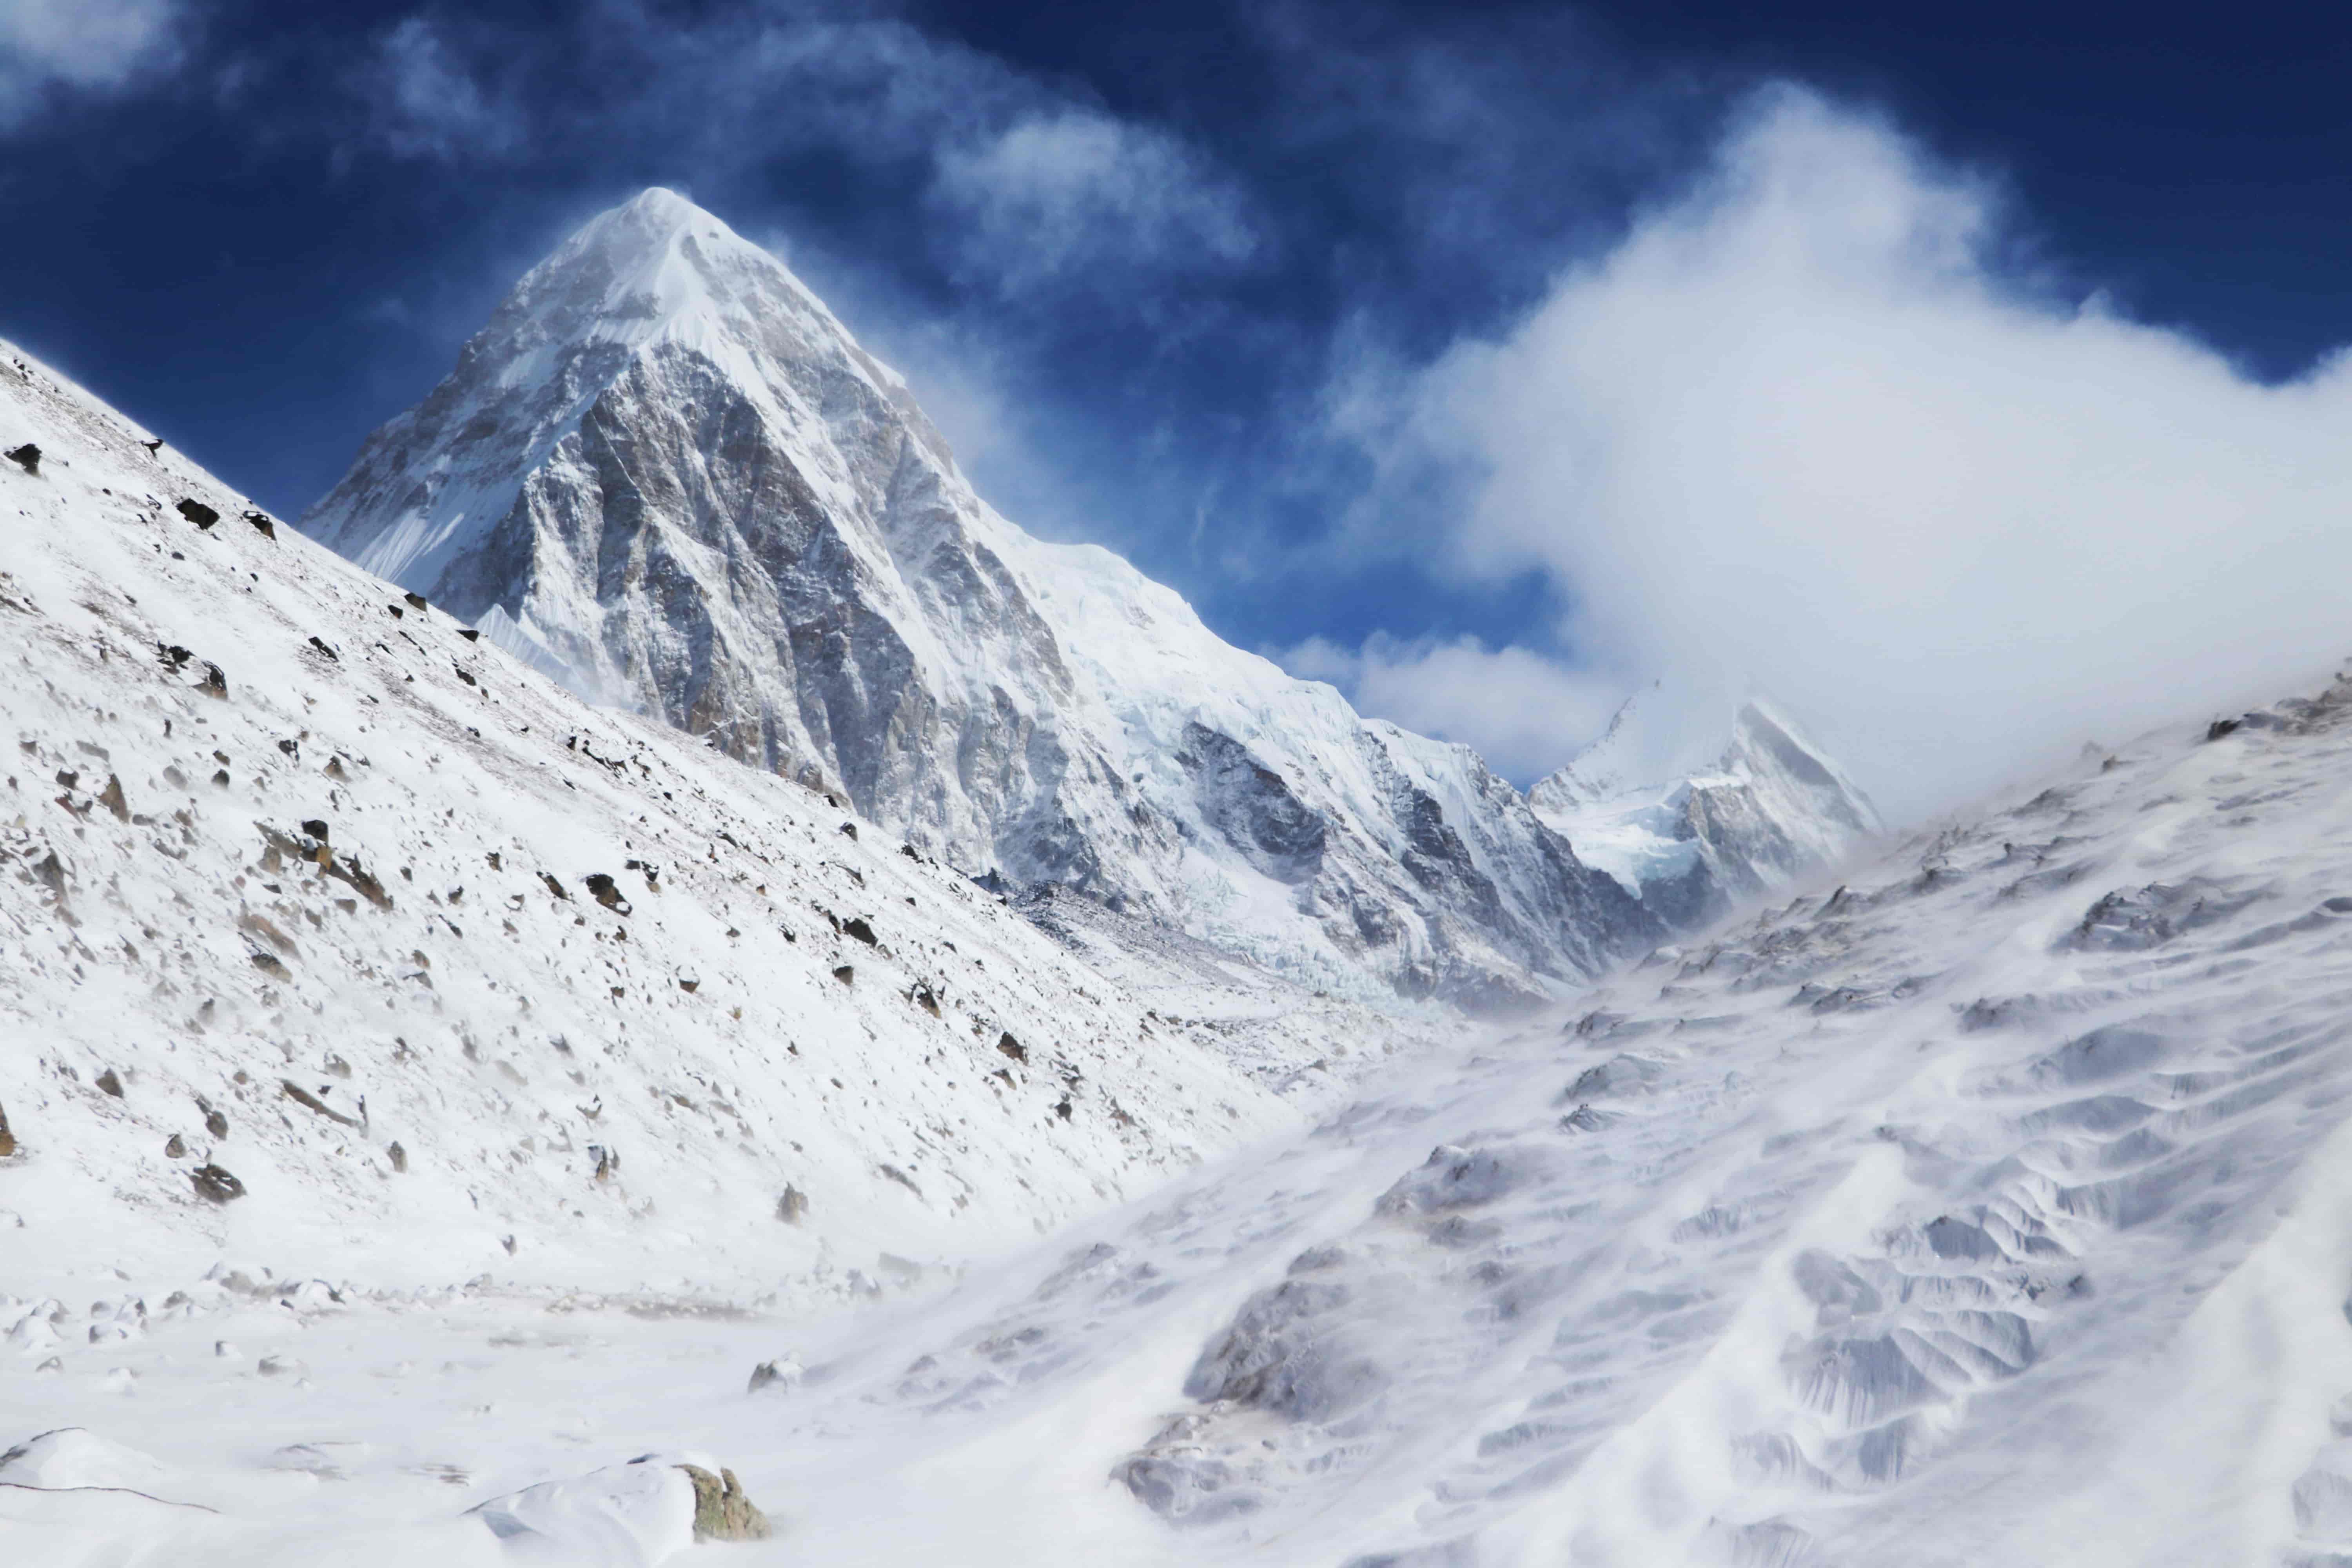 Windy day in the Himalayan mountains hatzav aviv photography